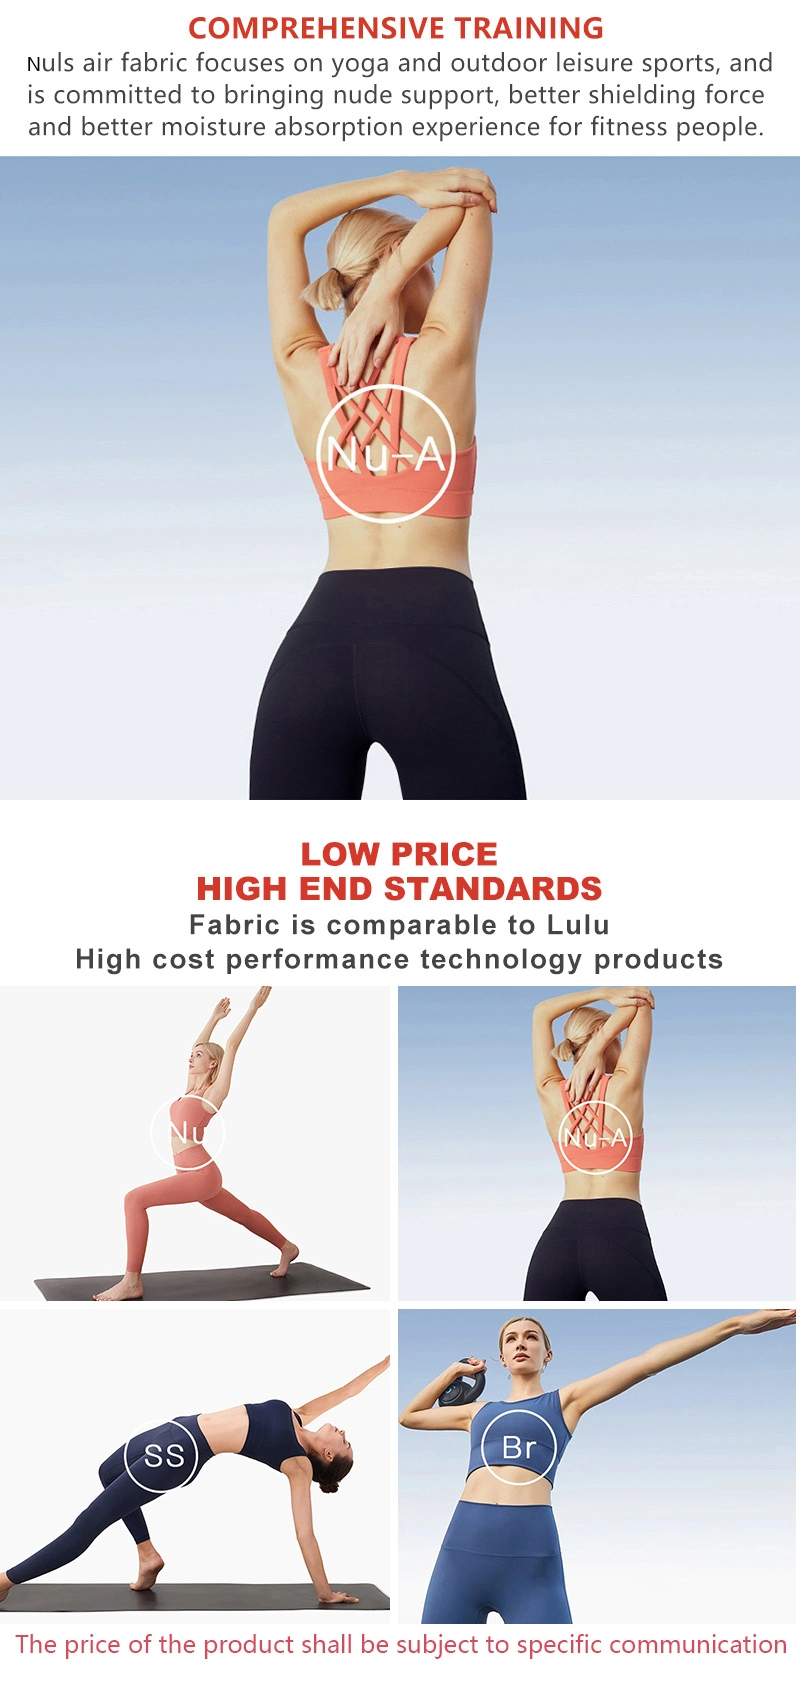 2020 Women Active Wear Sports Bra Tie Dye Sublimation Yoga Bra Workout